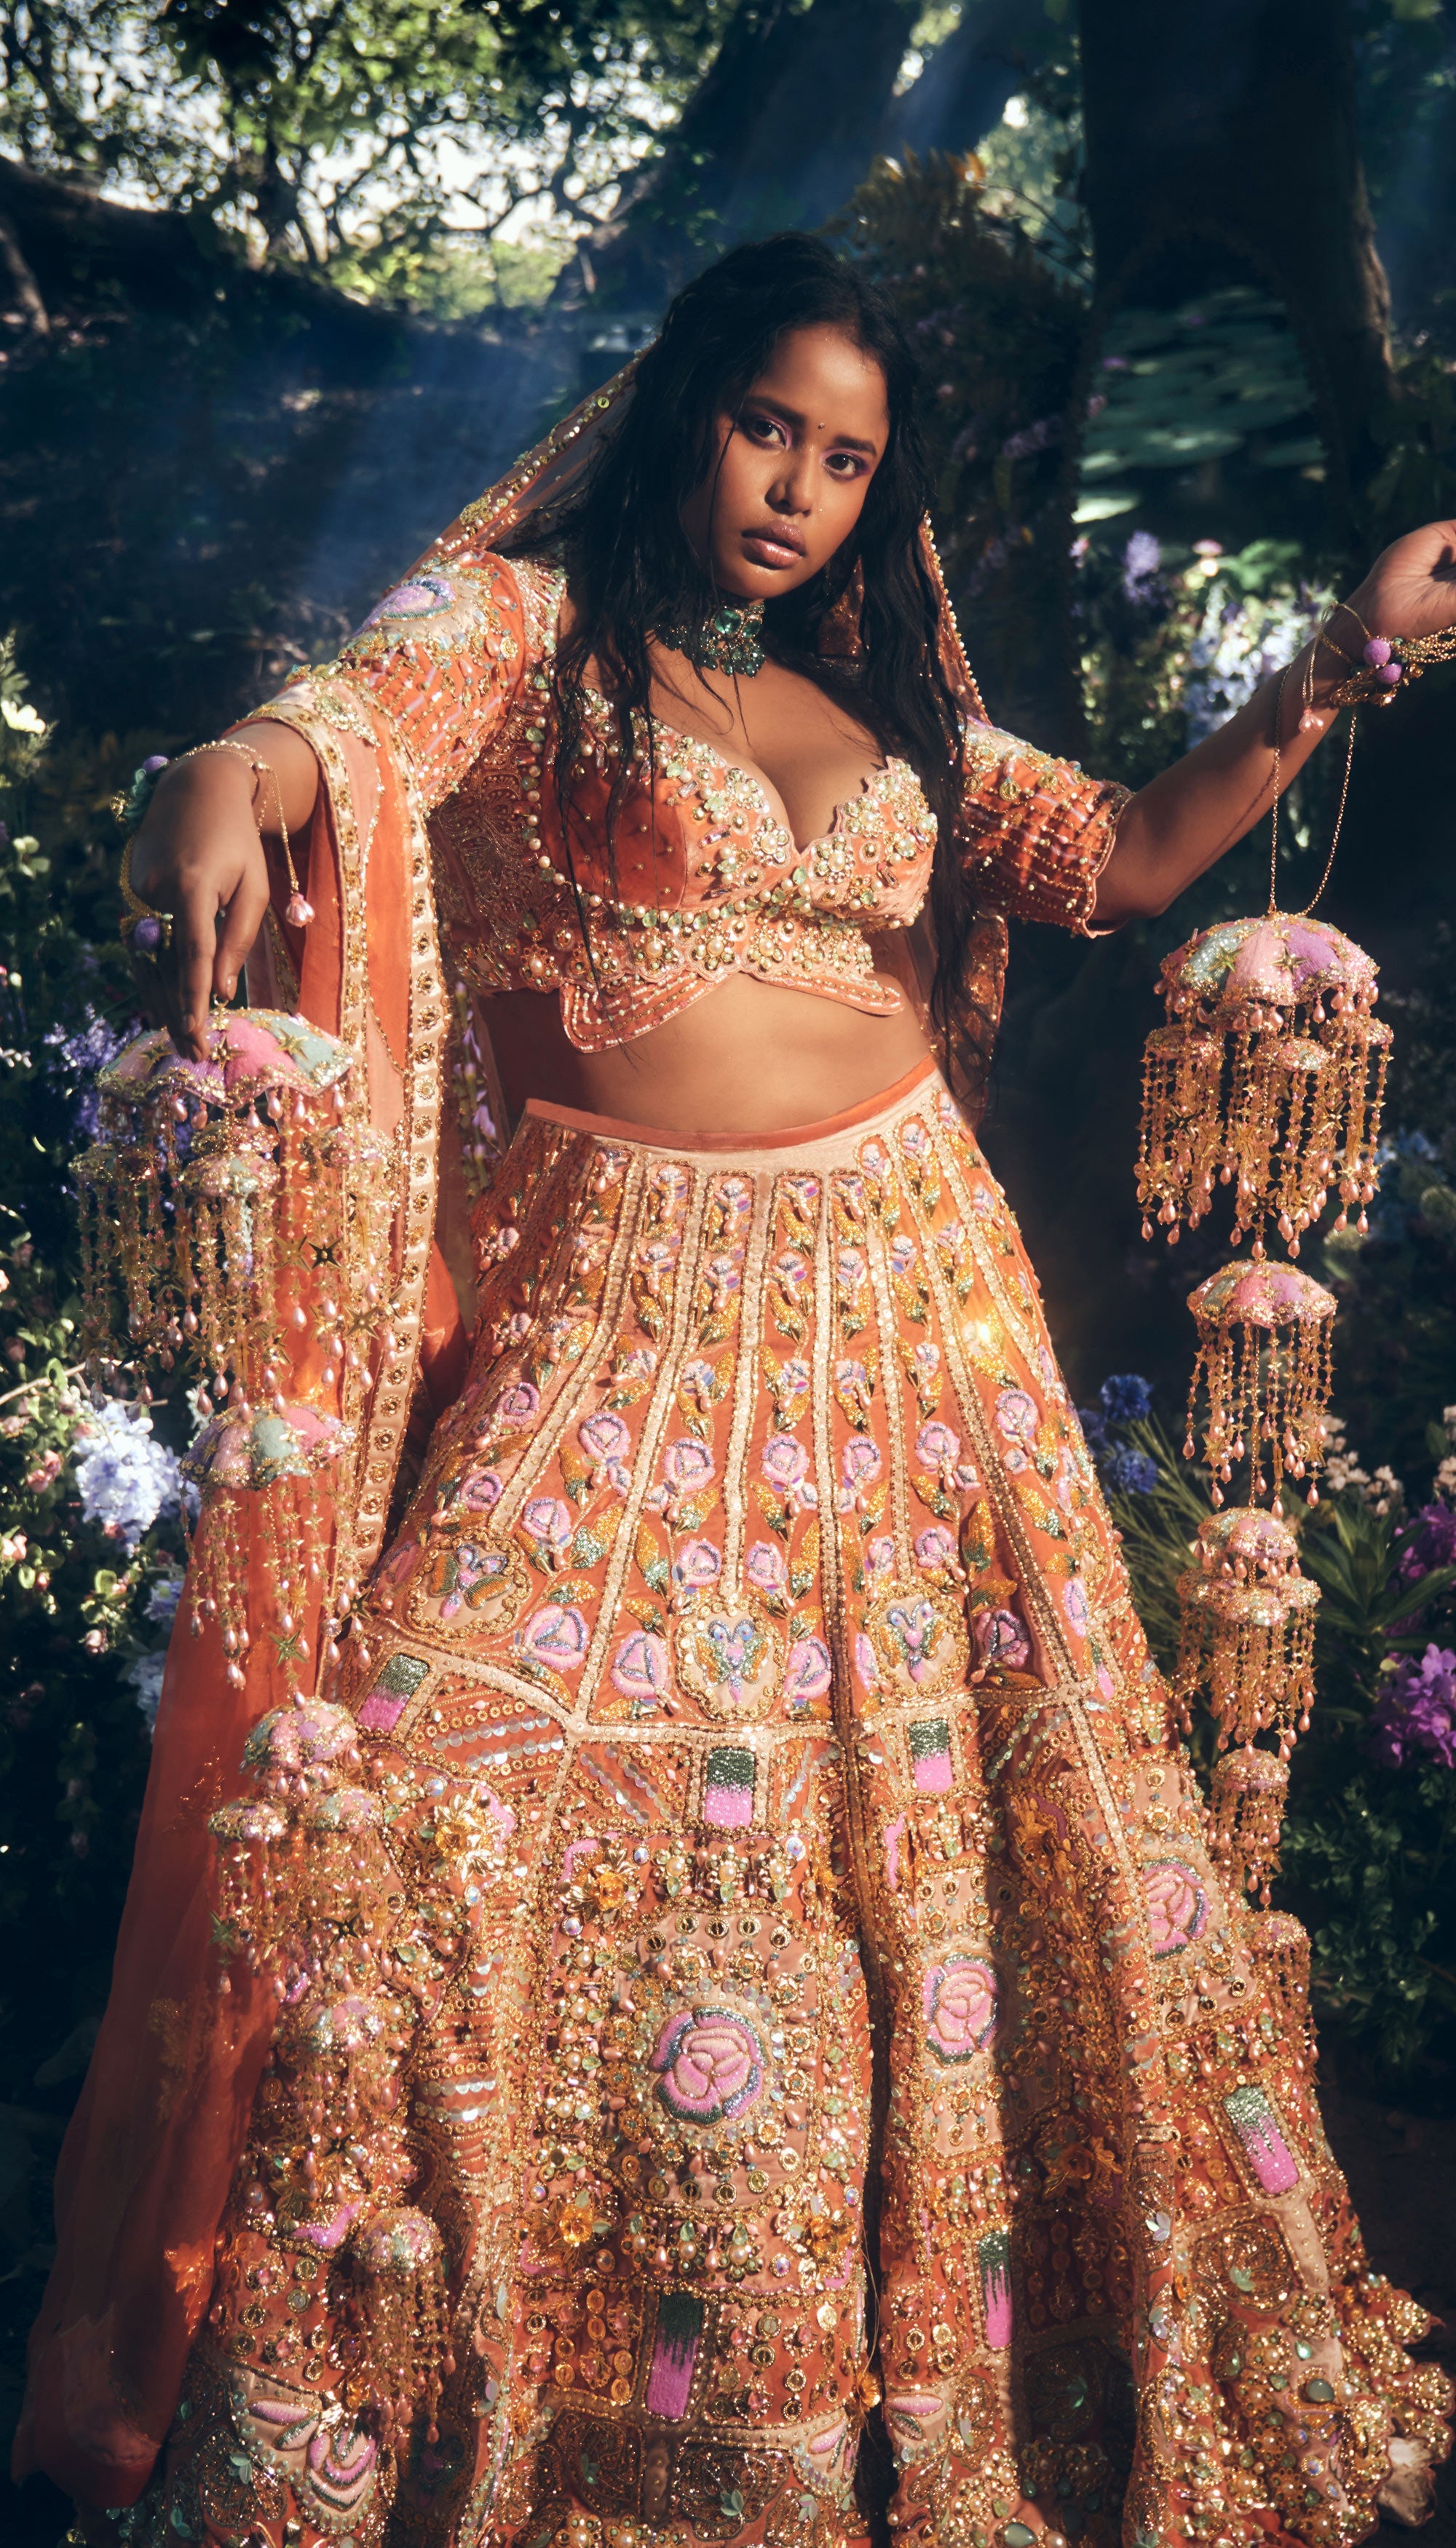 Indian Bridal Wedding Sarees Online | Satya Paul by SatyaPaul on DeviantArt